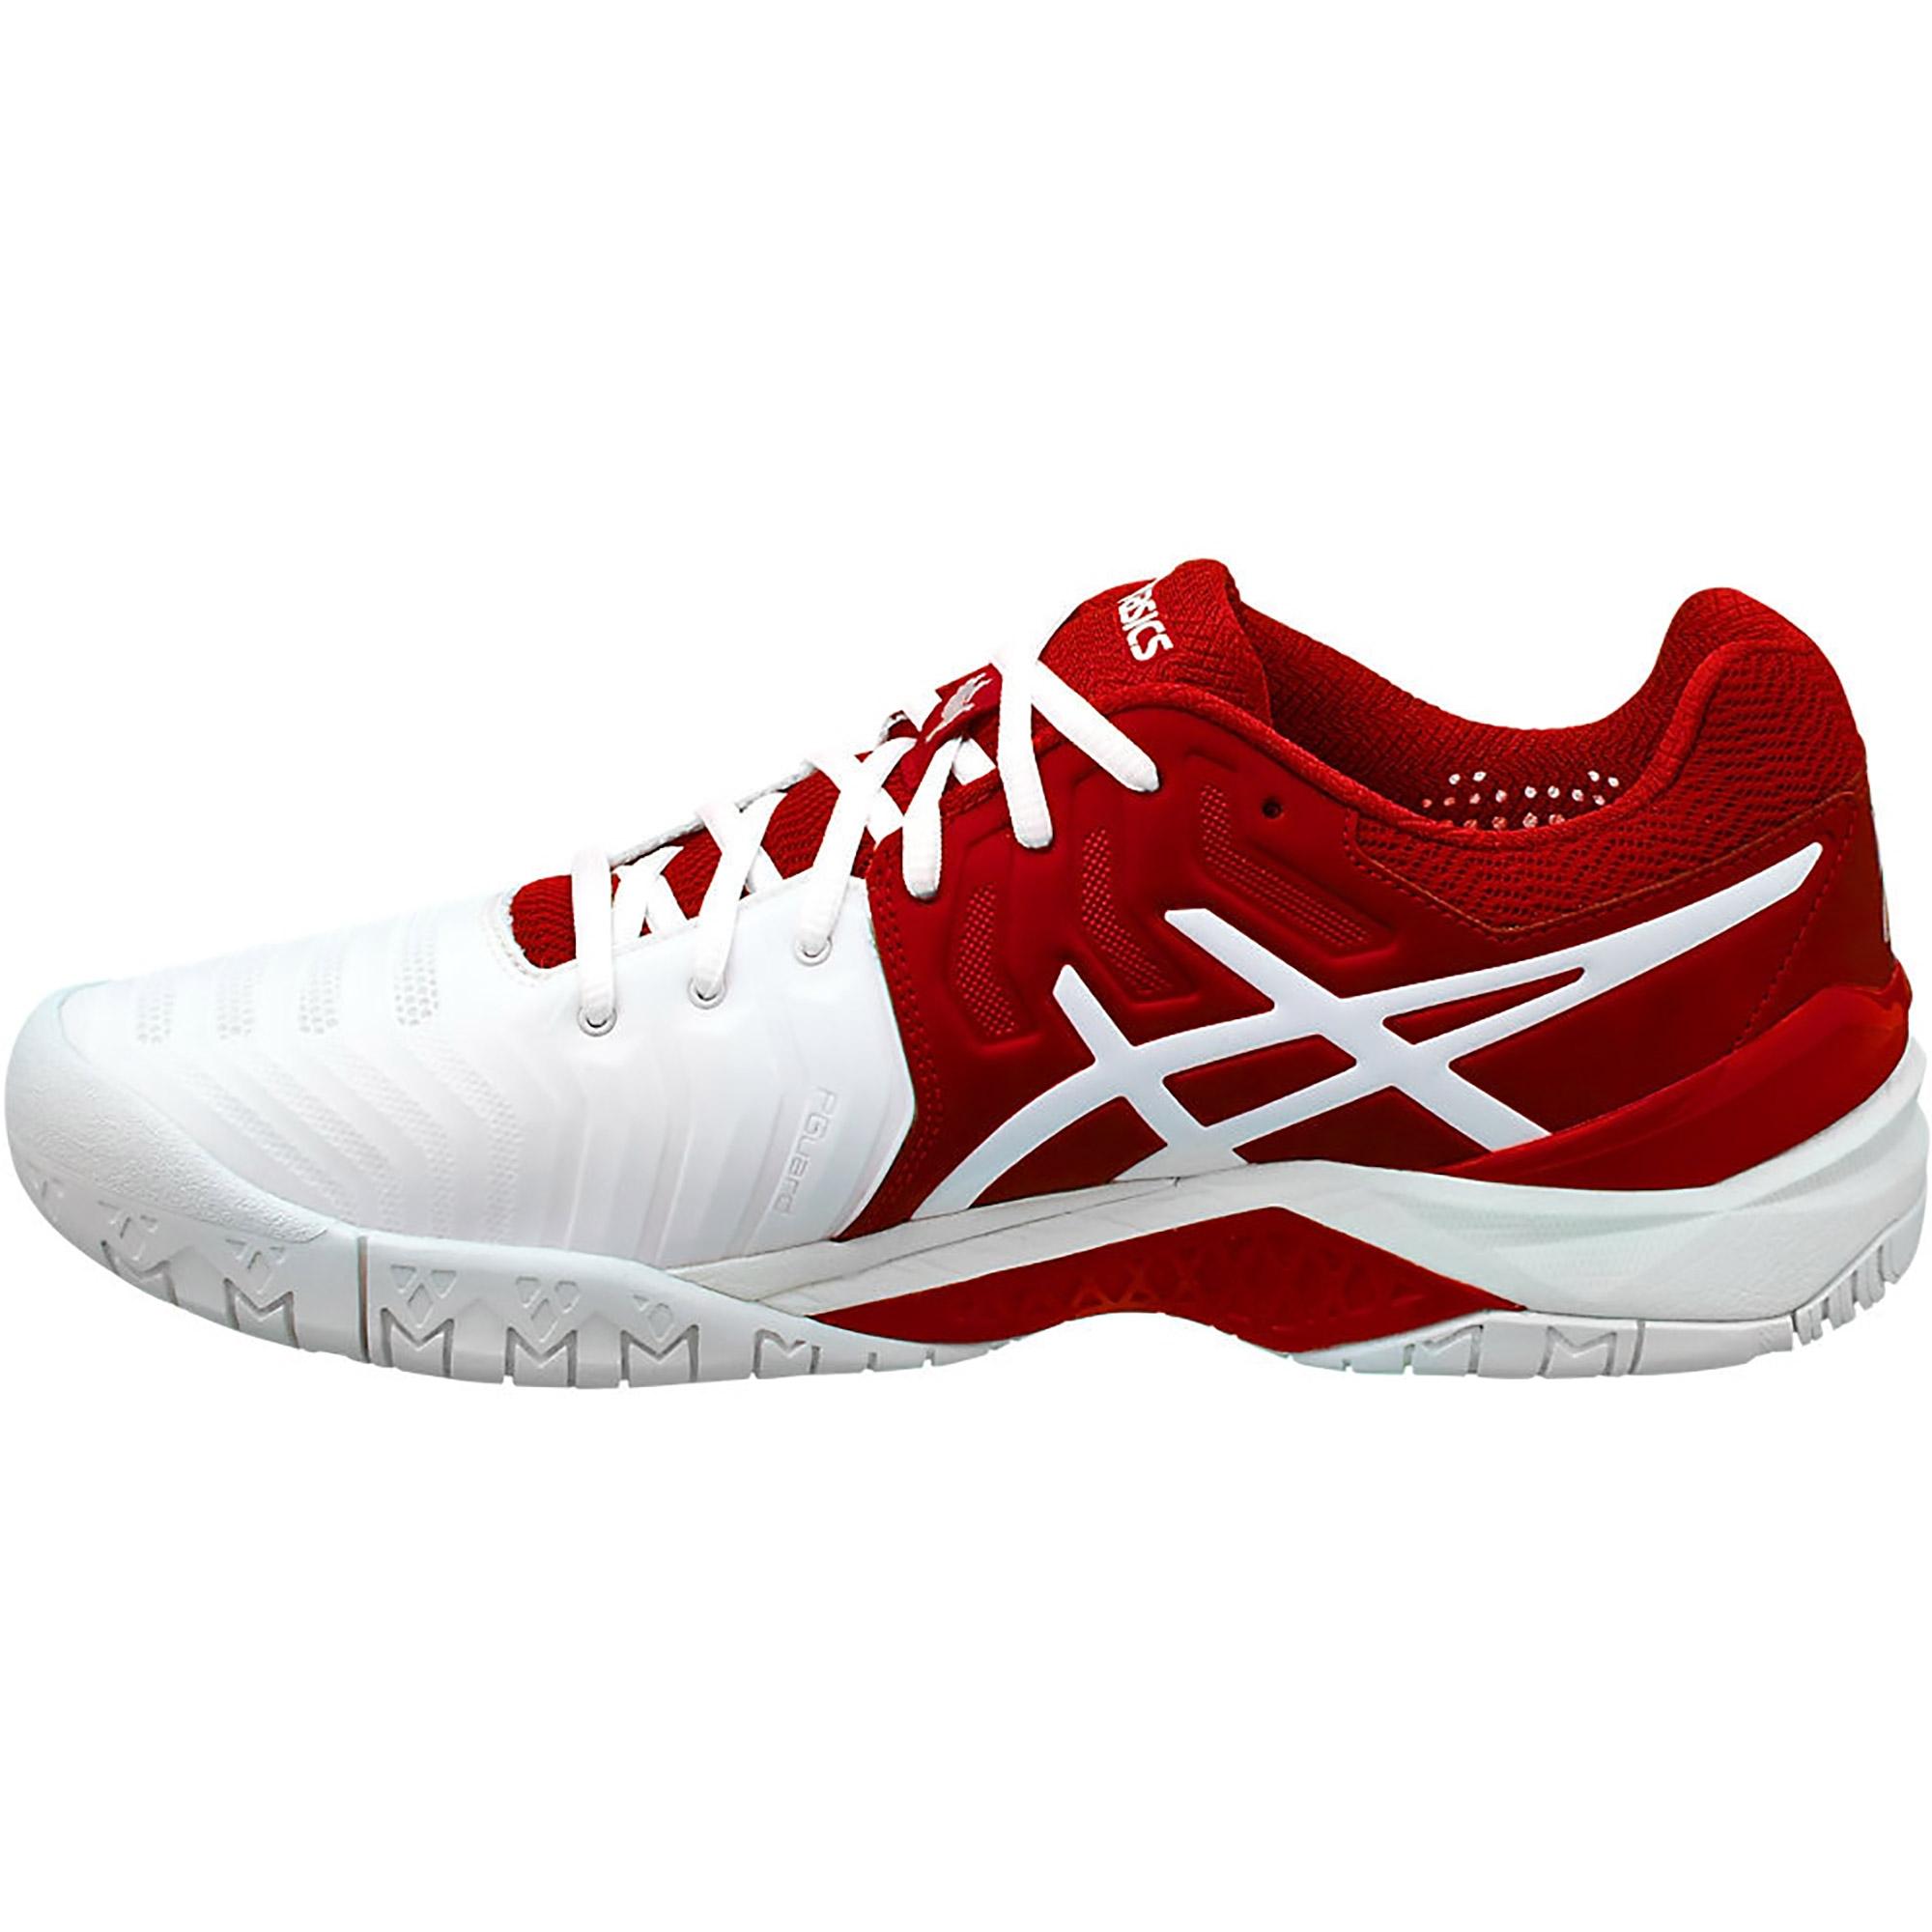 Asics Mens GEL-Resolution Tennis Shoes - Classic Red/White - Tennisnuts.com